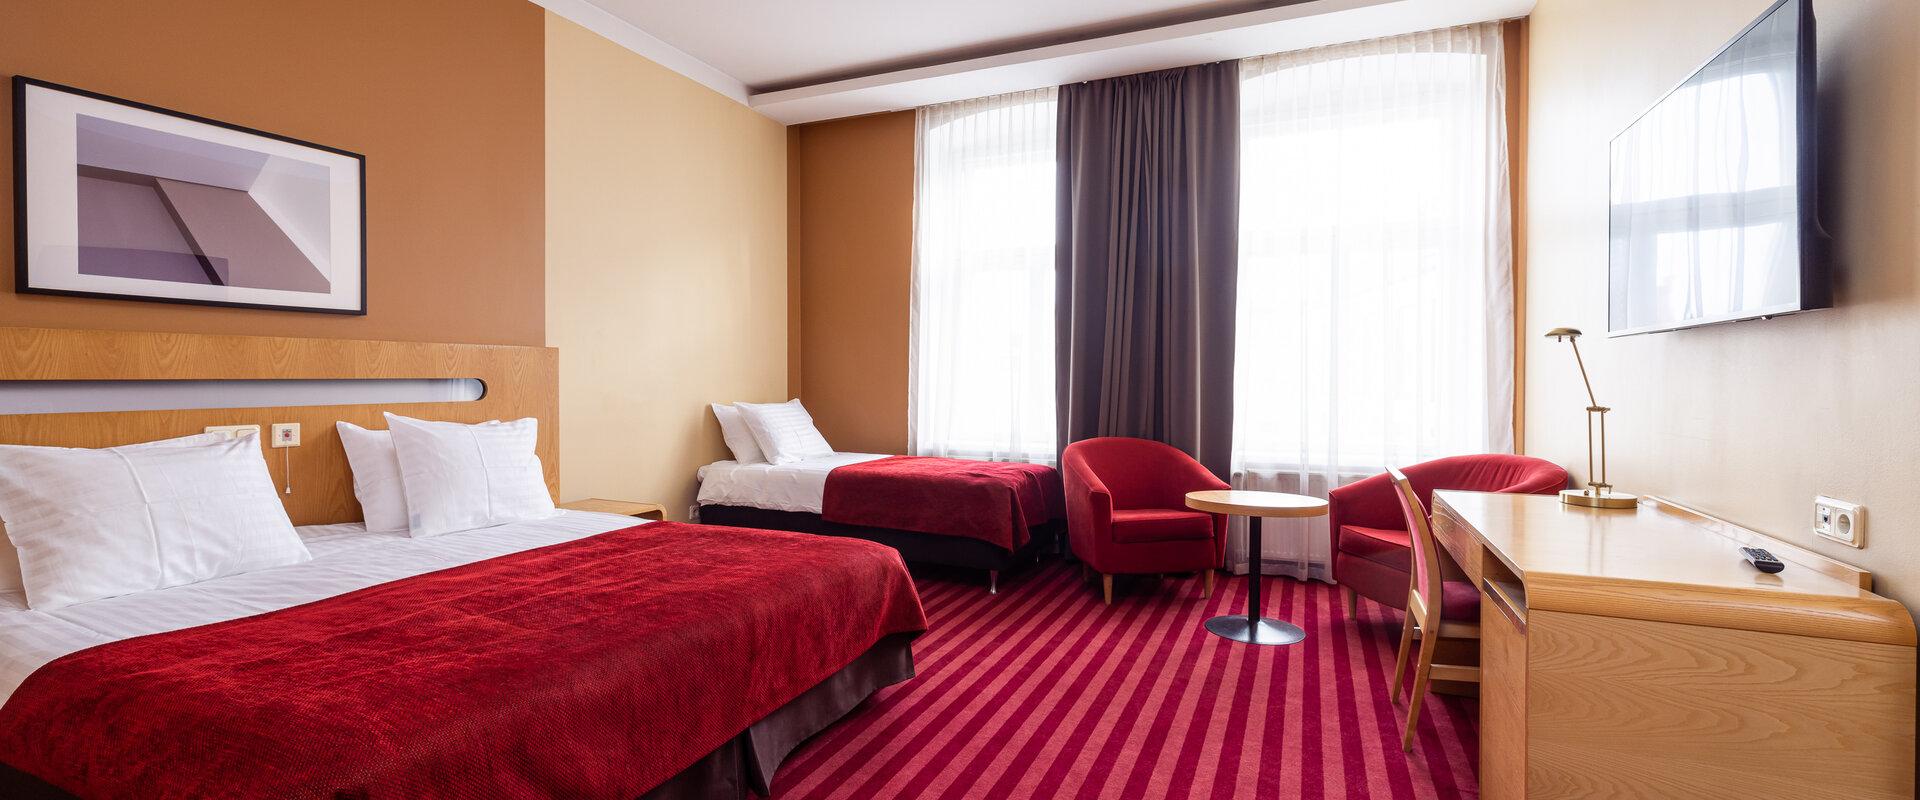 Hotel SOHO triple room